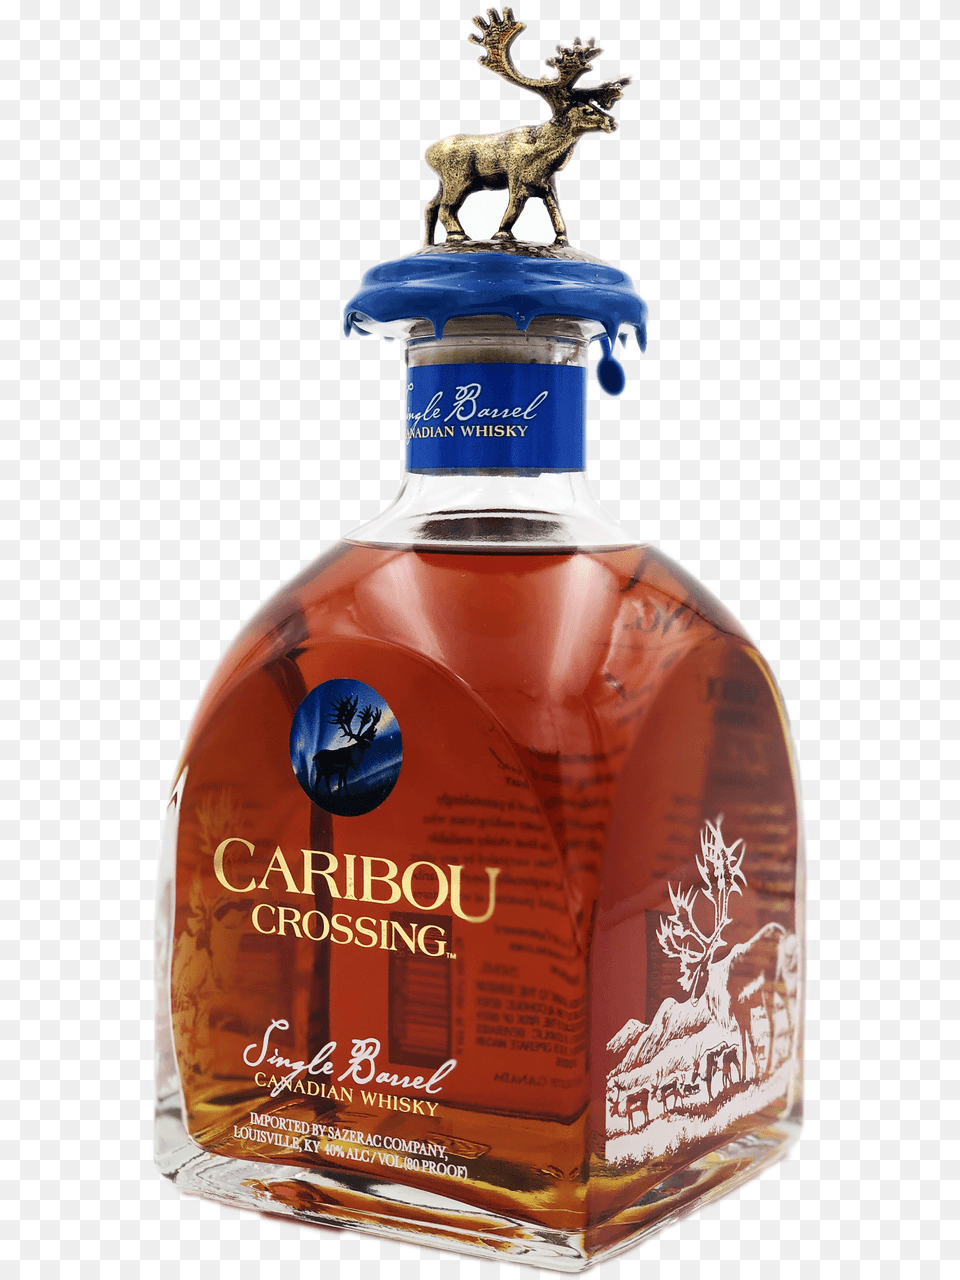 Caribou Crossing Single Barrel Whisky Domaine De Canton, Alcohol, Beverage, Liquor, Bottle Png